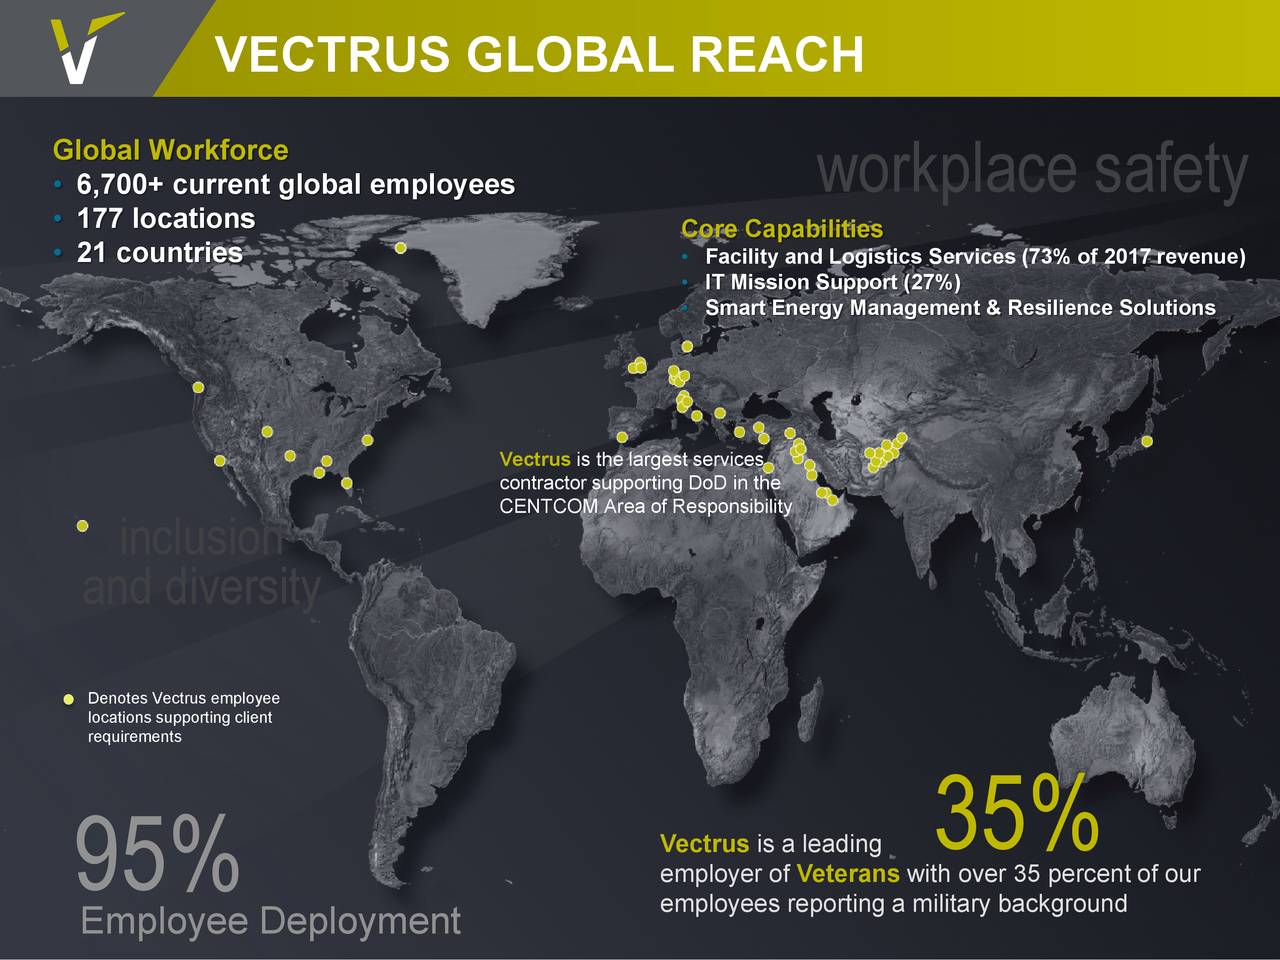 VECTRUS GLOBAL REACH